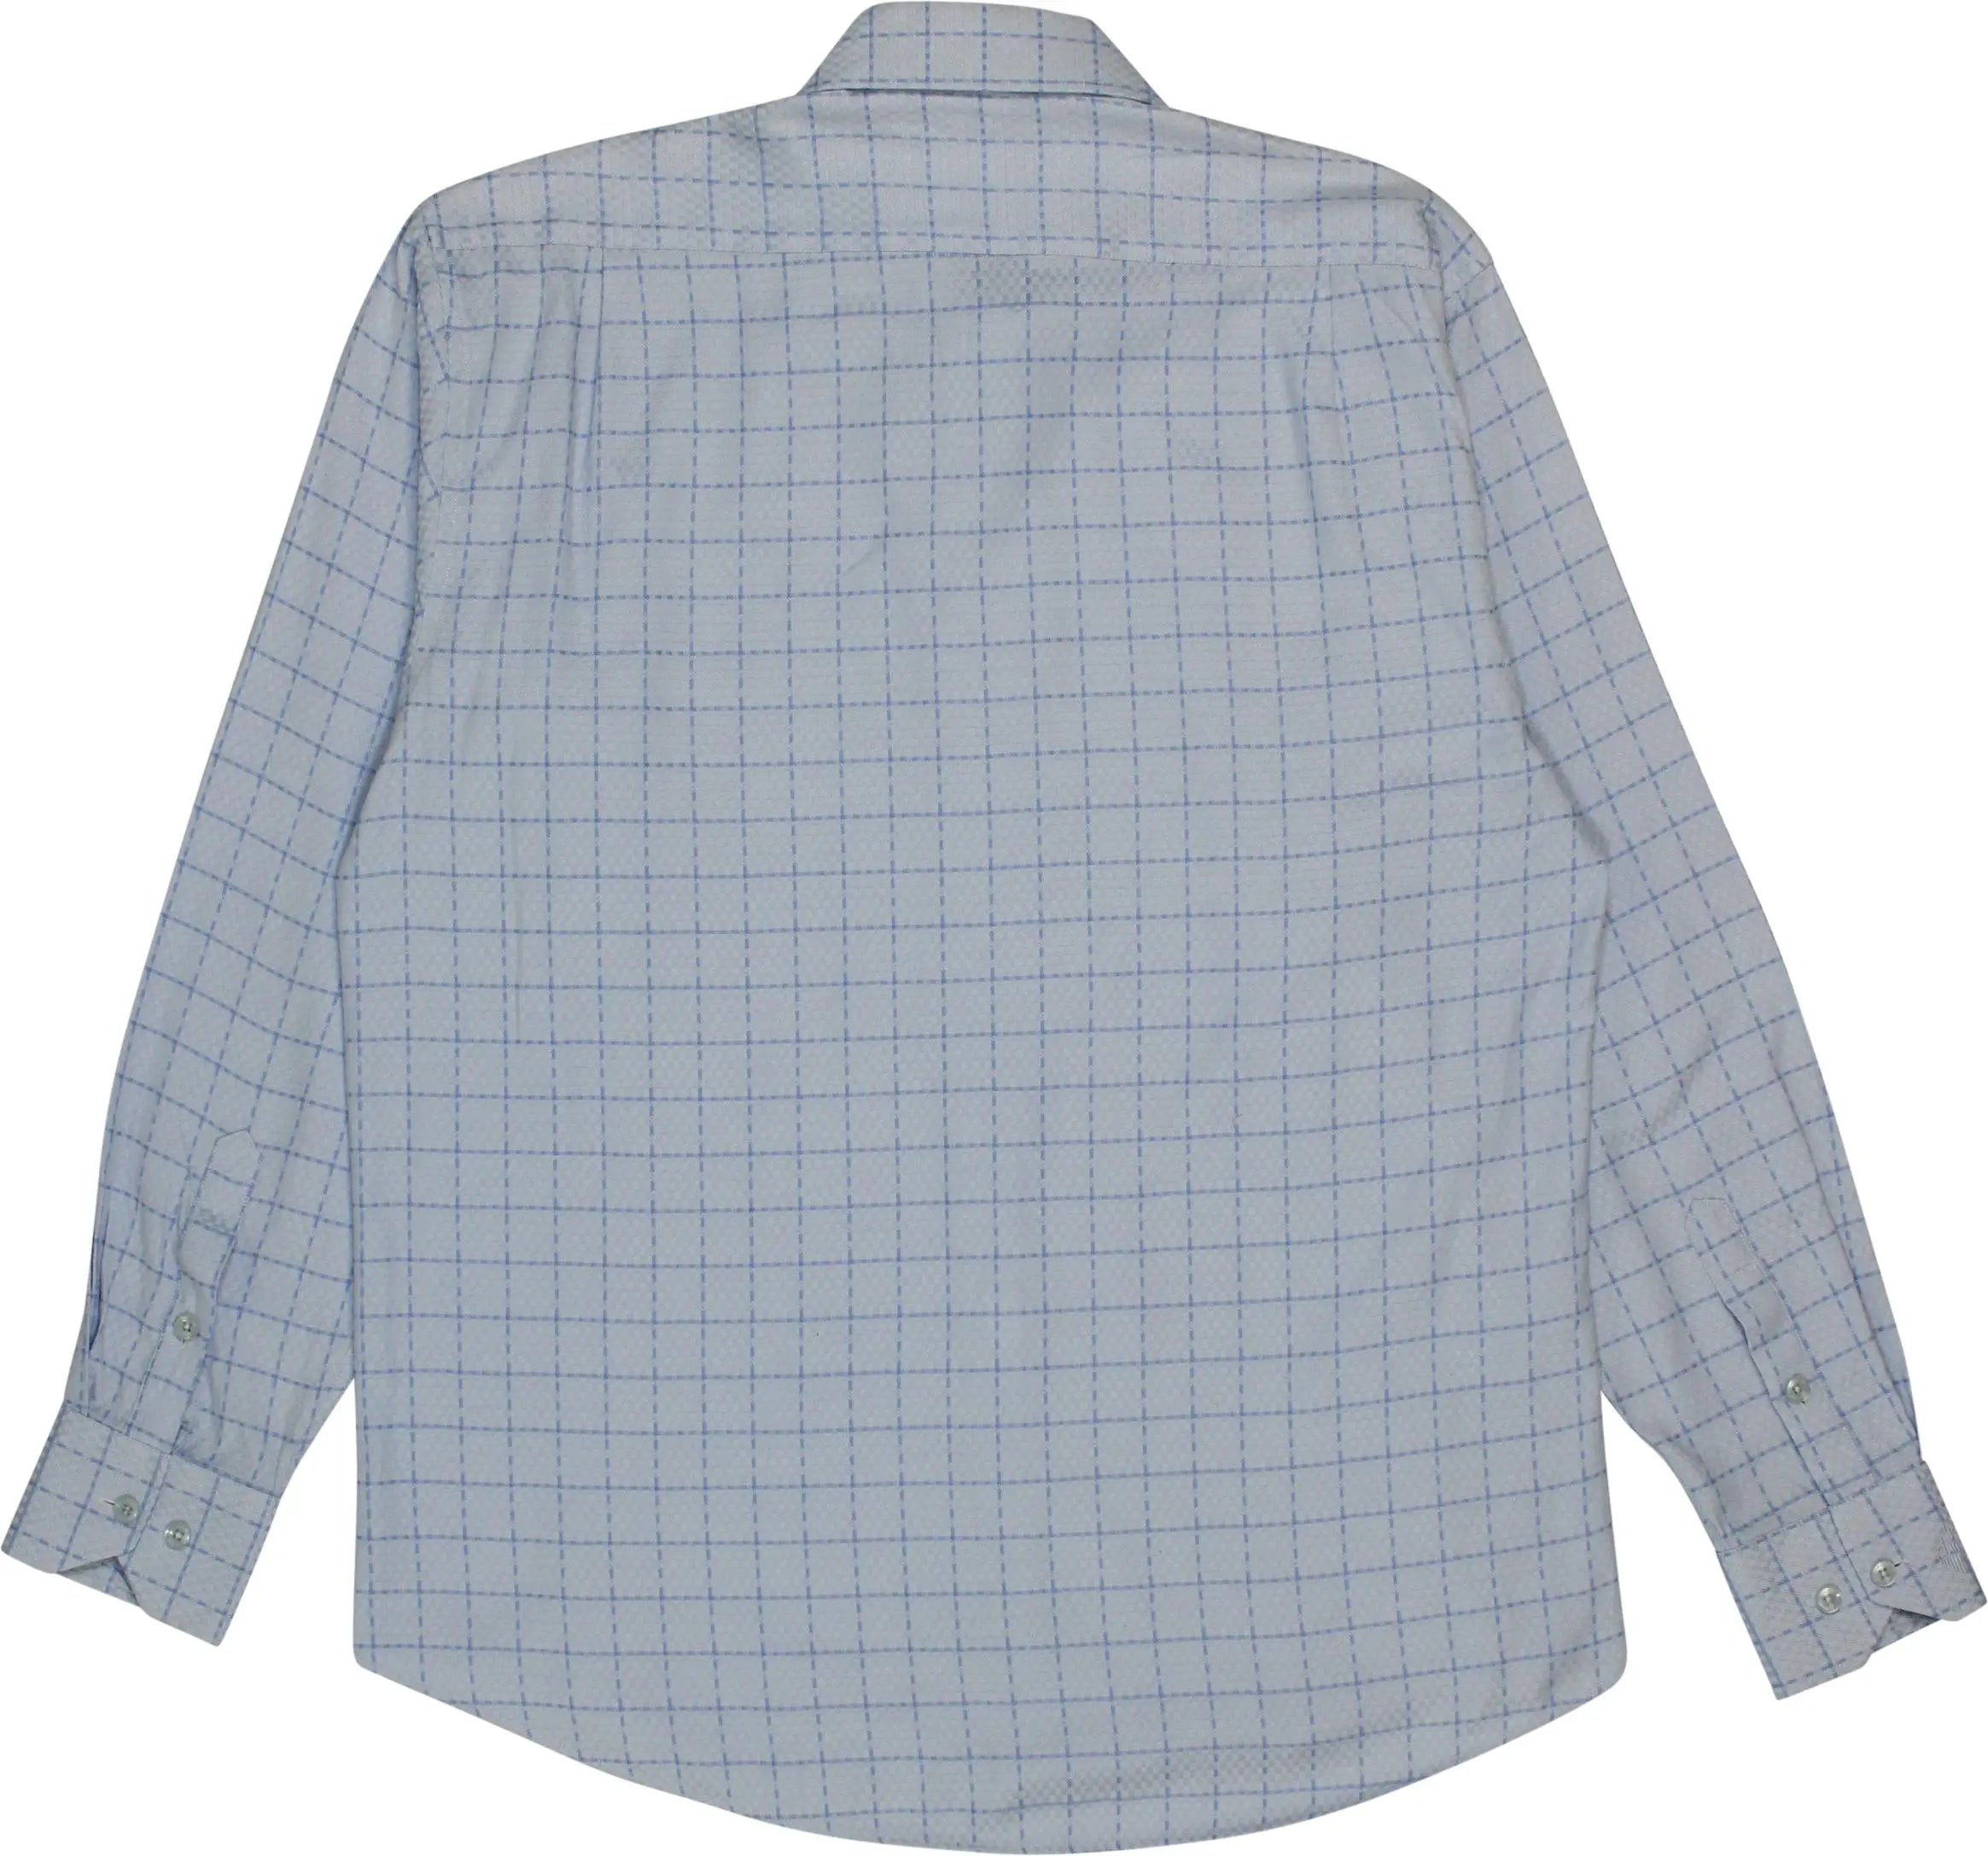 Giorgio Armani - Giorgio Armani Jaquard Shirt- ThriftTale.com - Vintage and second handclothing